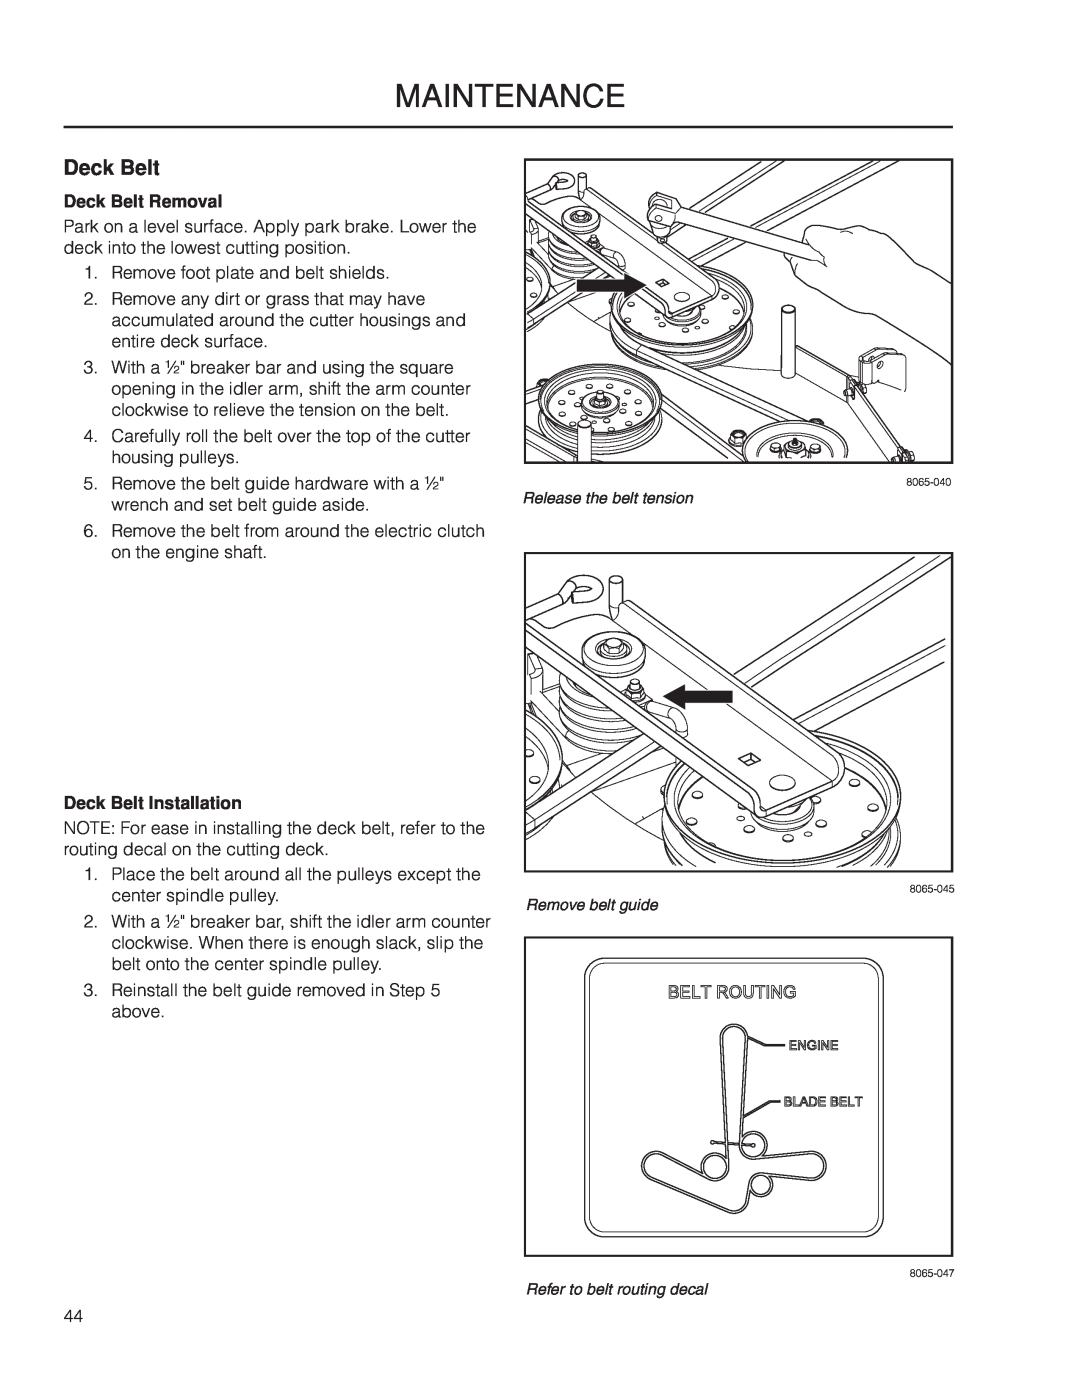 Yazoo/Kees ZPKW5426 manual Deck Belt Removal, Deck Belt Installation, maintenance 